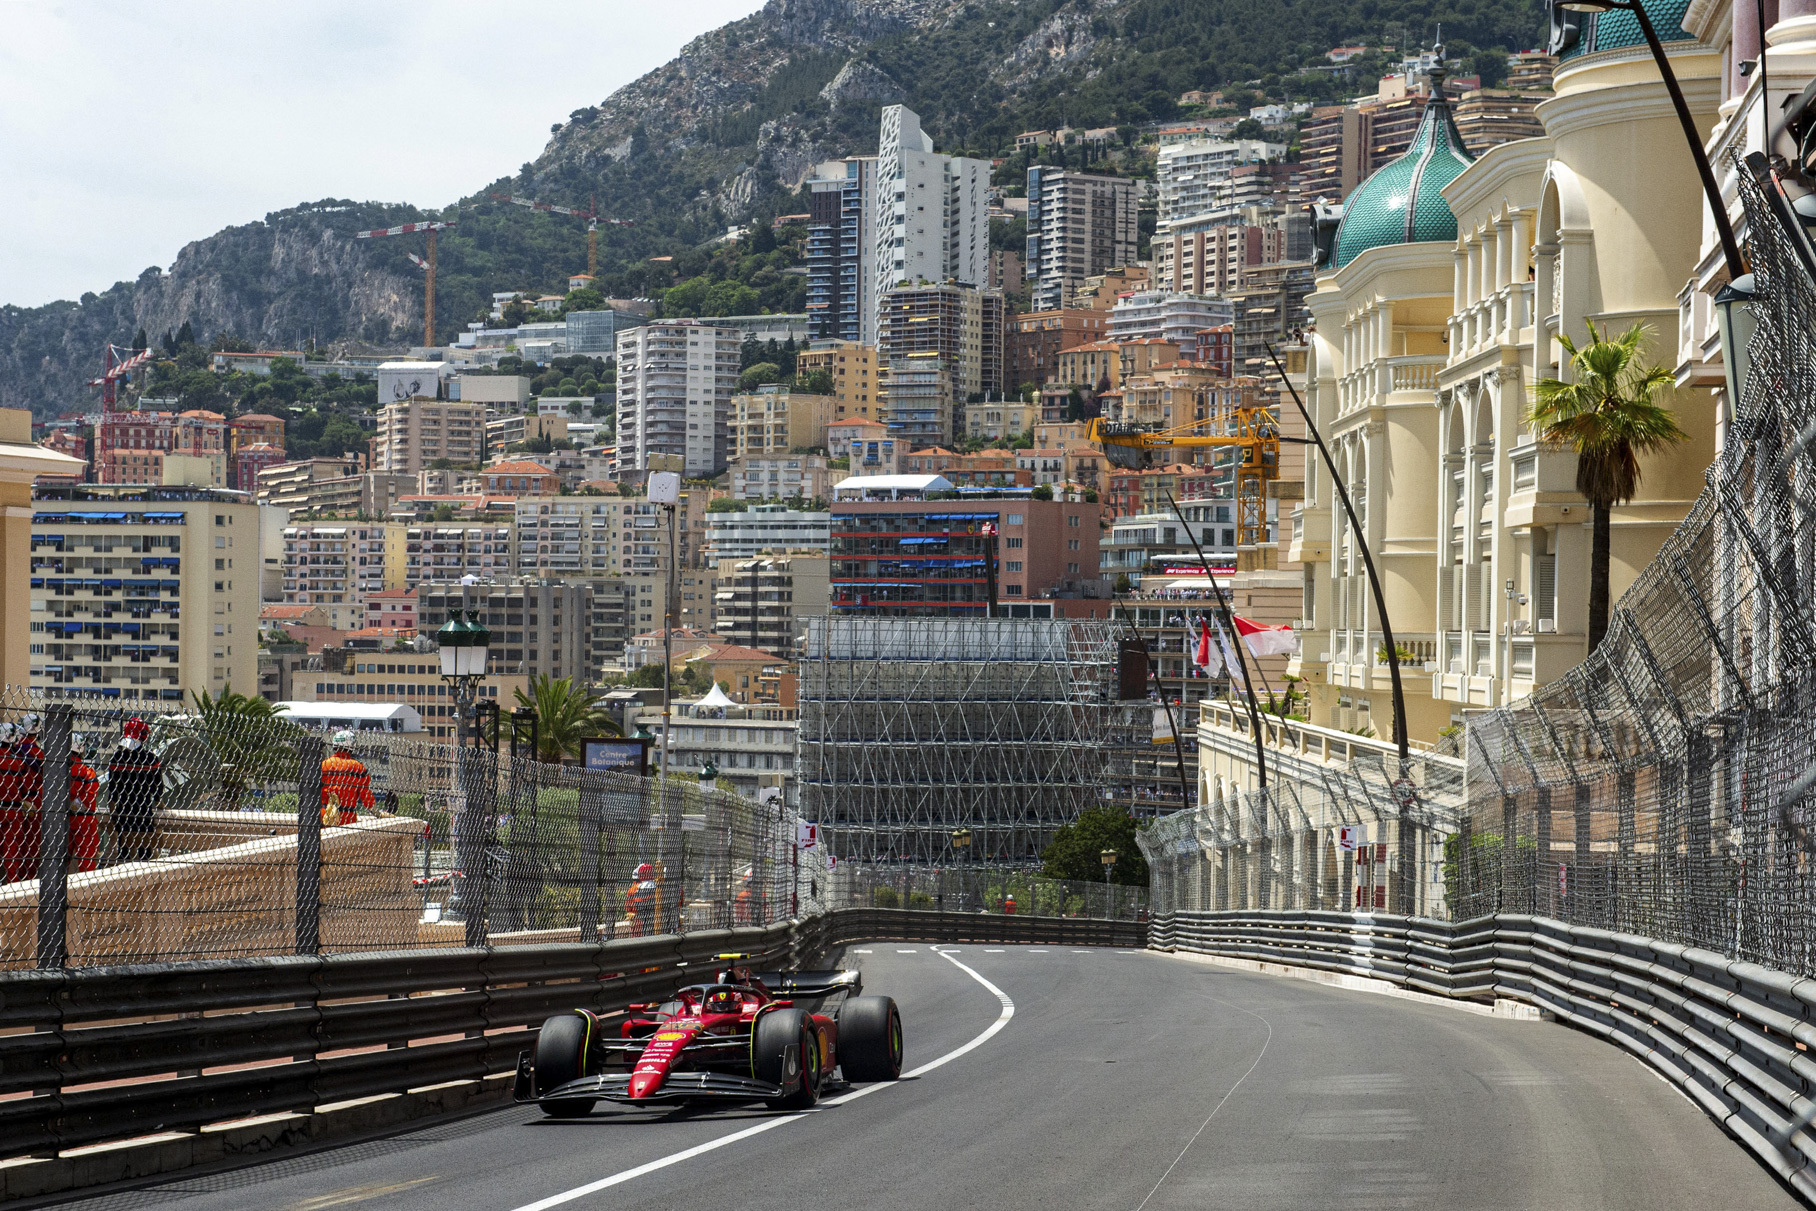 Светофоры и трафик: обзор Гран-при Монако